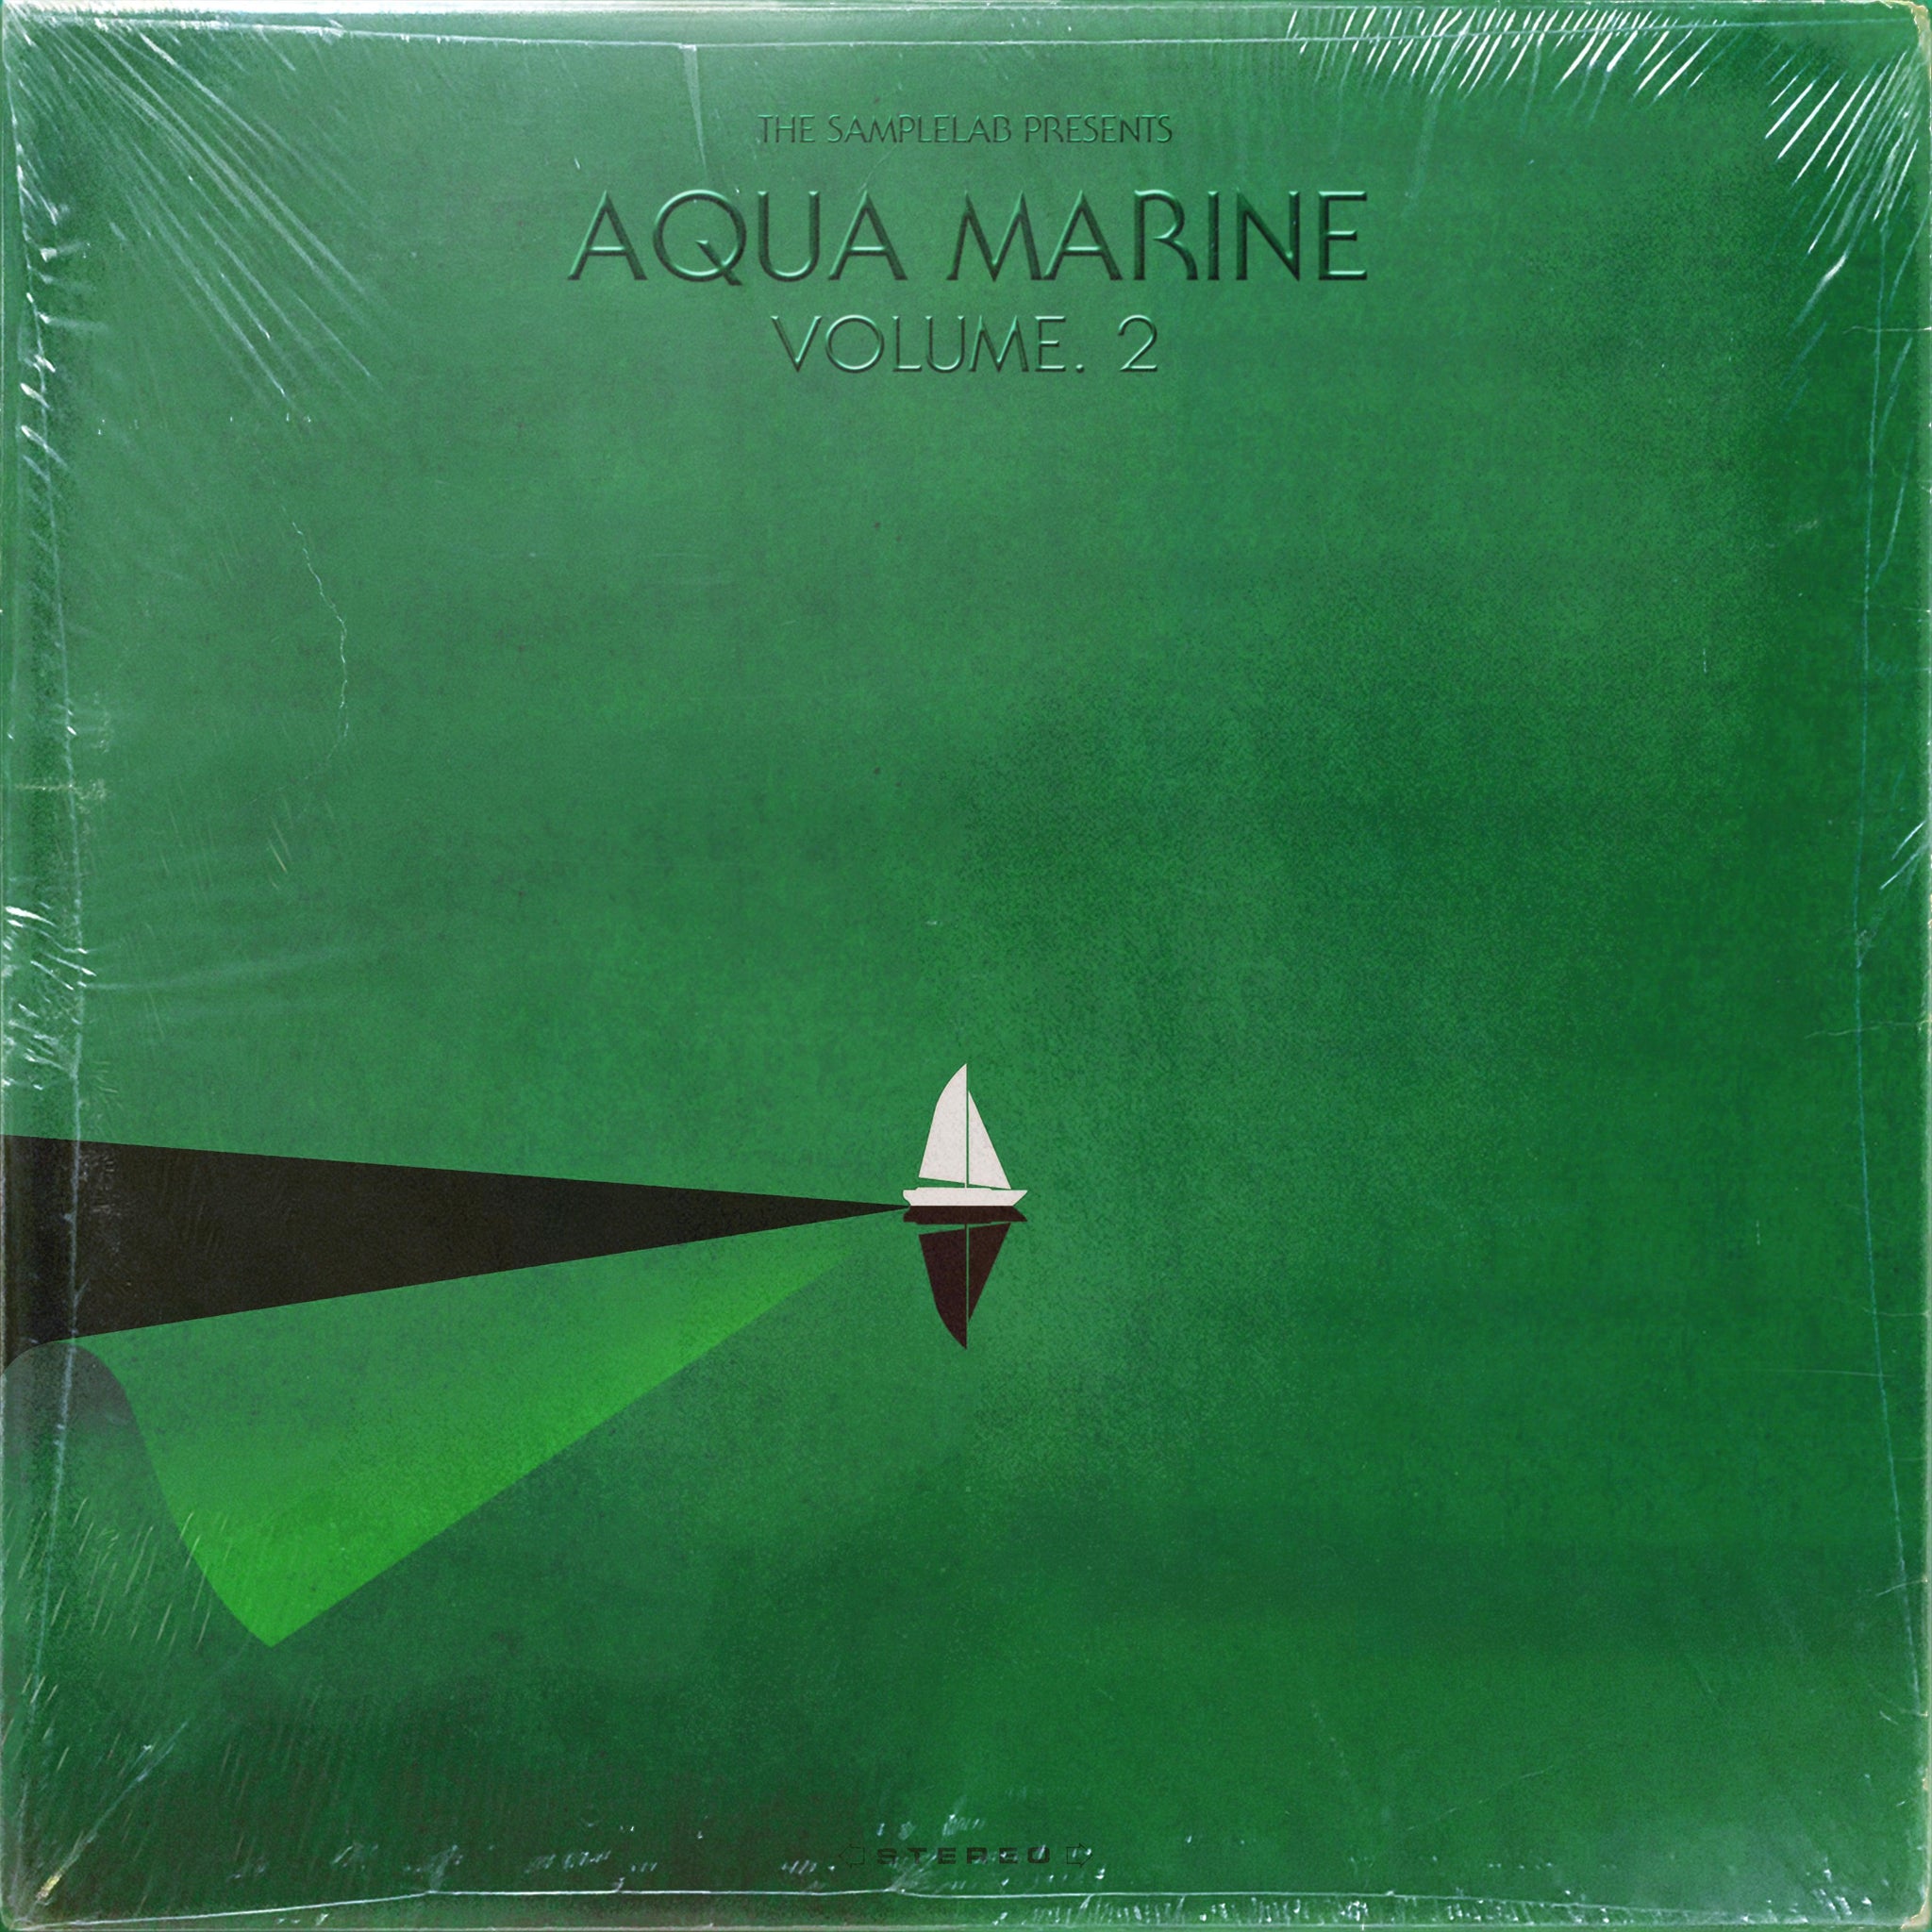 Aqua Marine Volume 2 - The Sample Lab